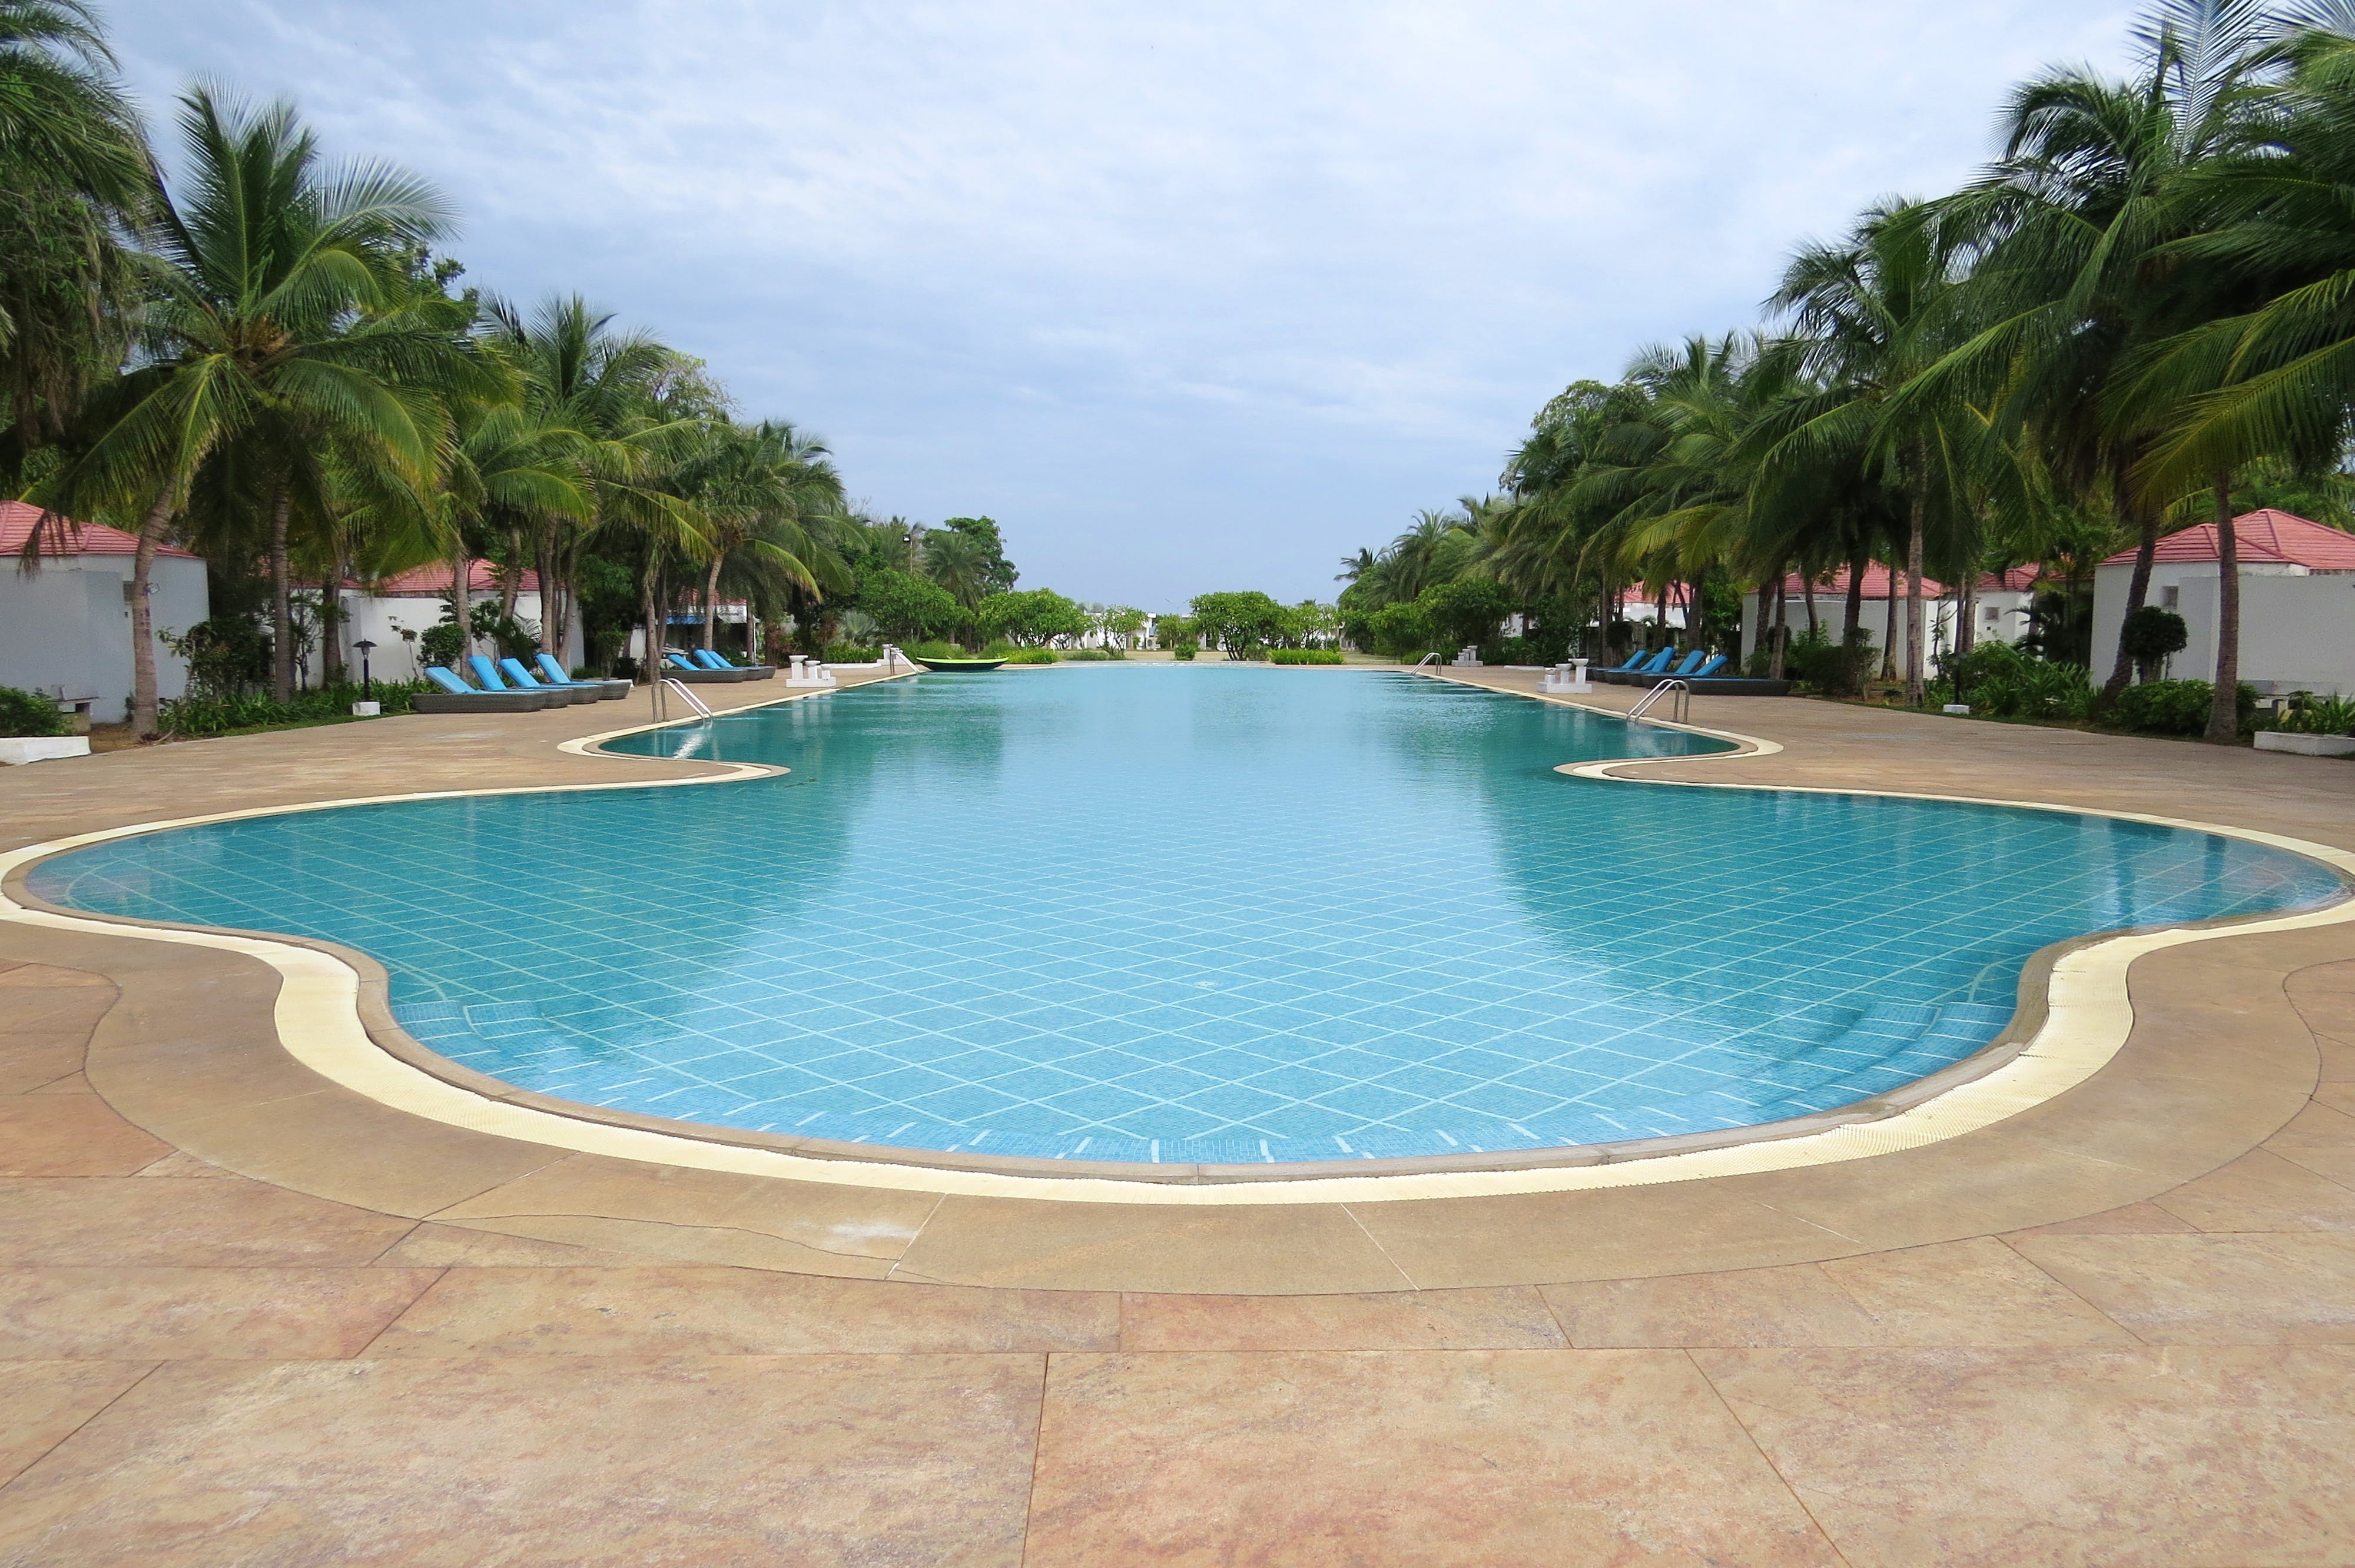 Swimming pool,Property,Resort,Water,Vacation,Leisure,Palm tree,Resort town,Real estate,Tree